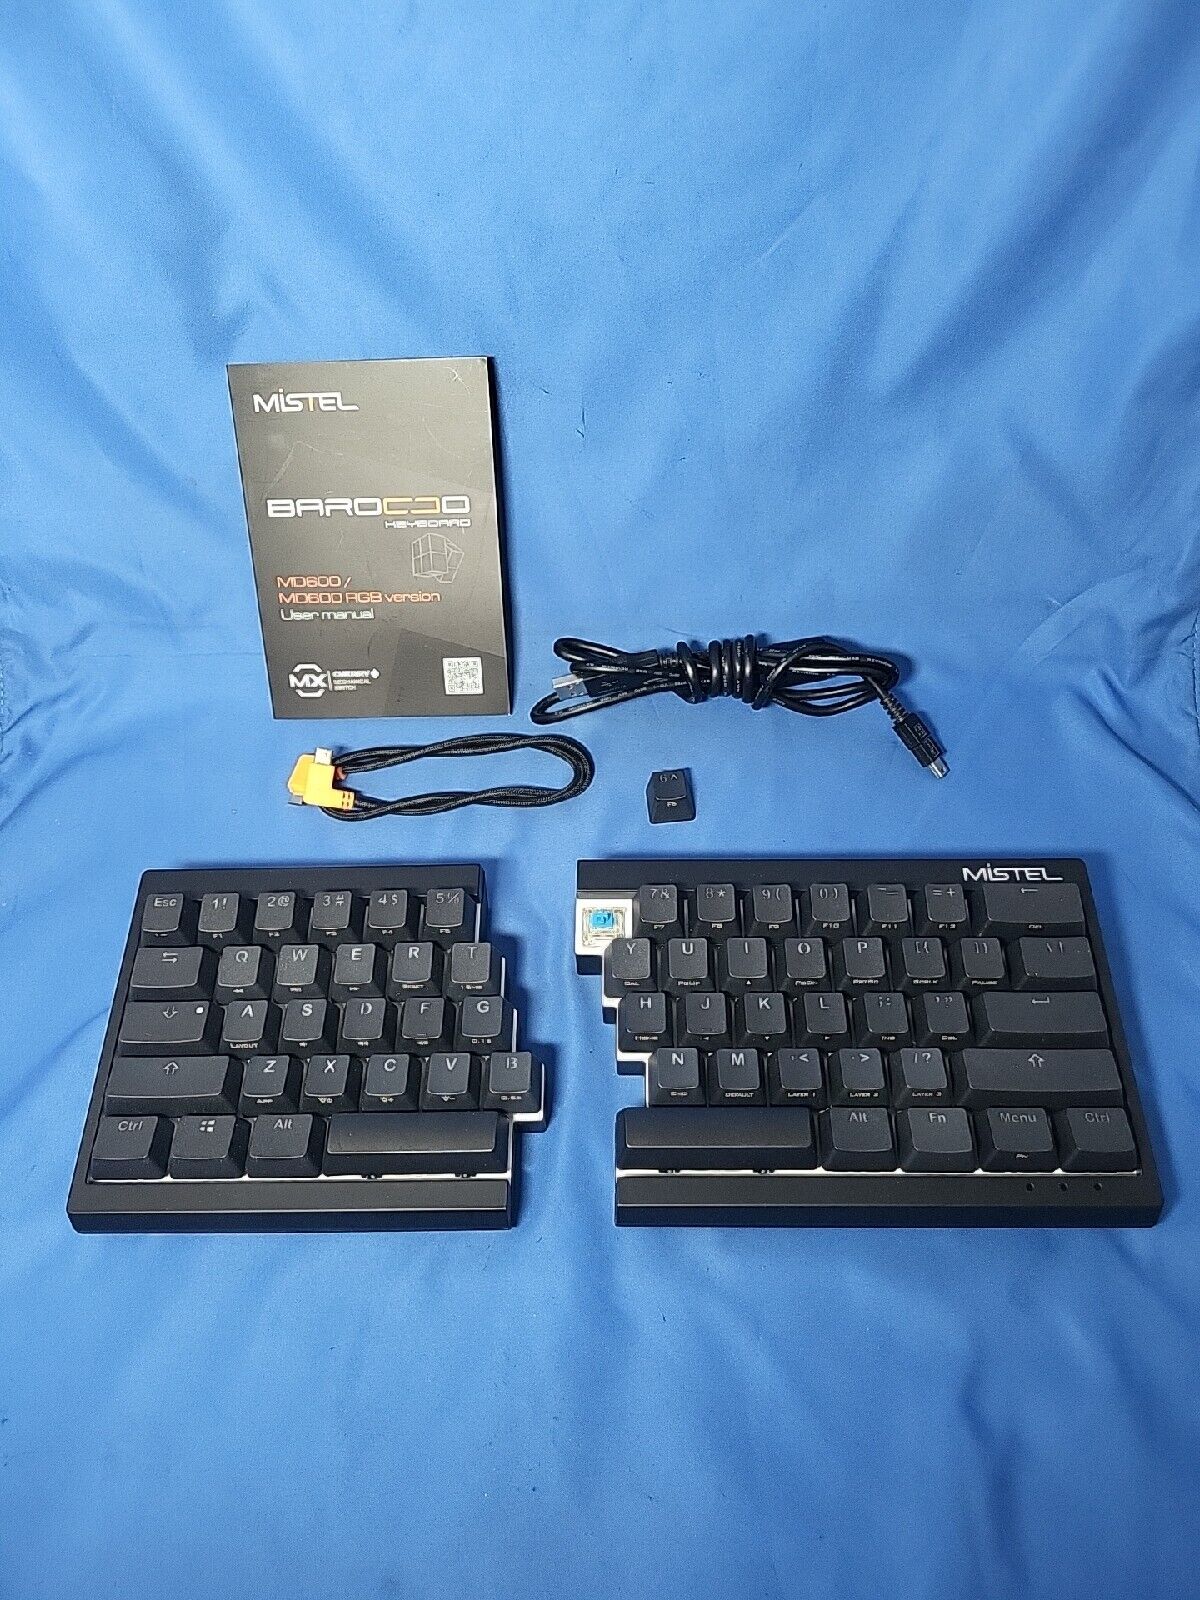 Mistel BAROCCO MD600 RGB Cherry MX Blue Keys Split Ergonomic Keyboard